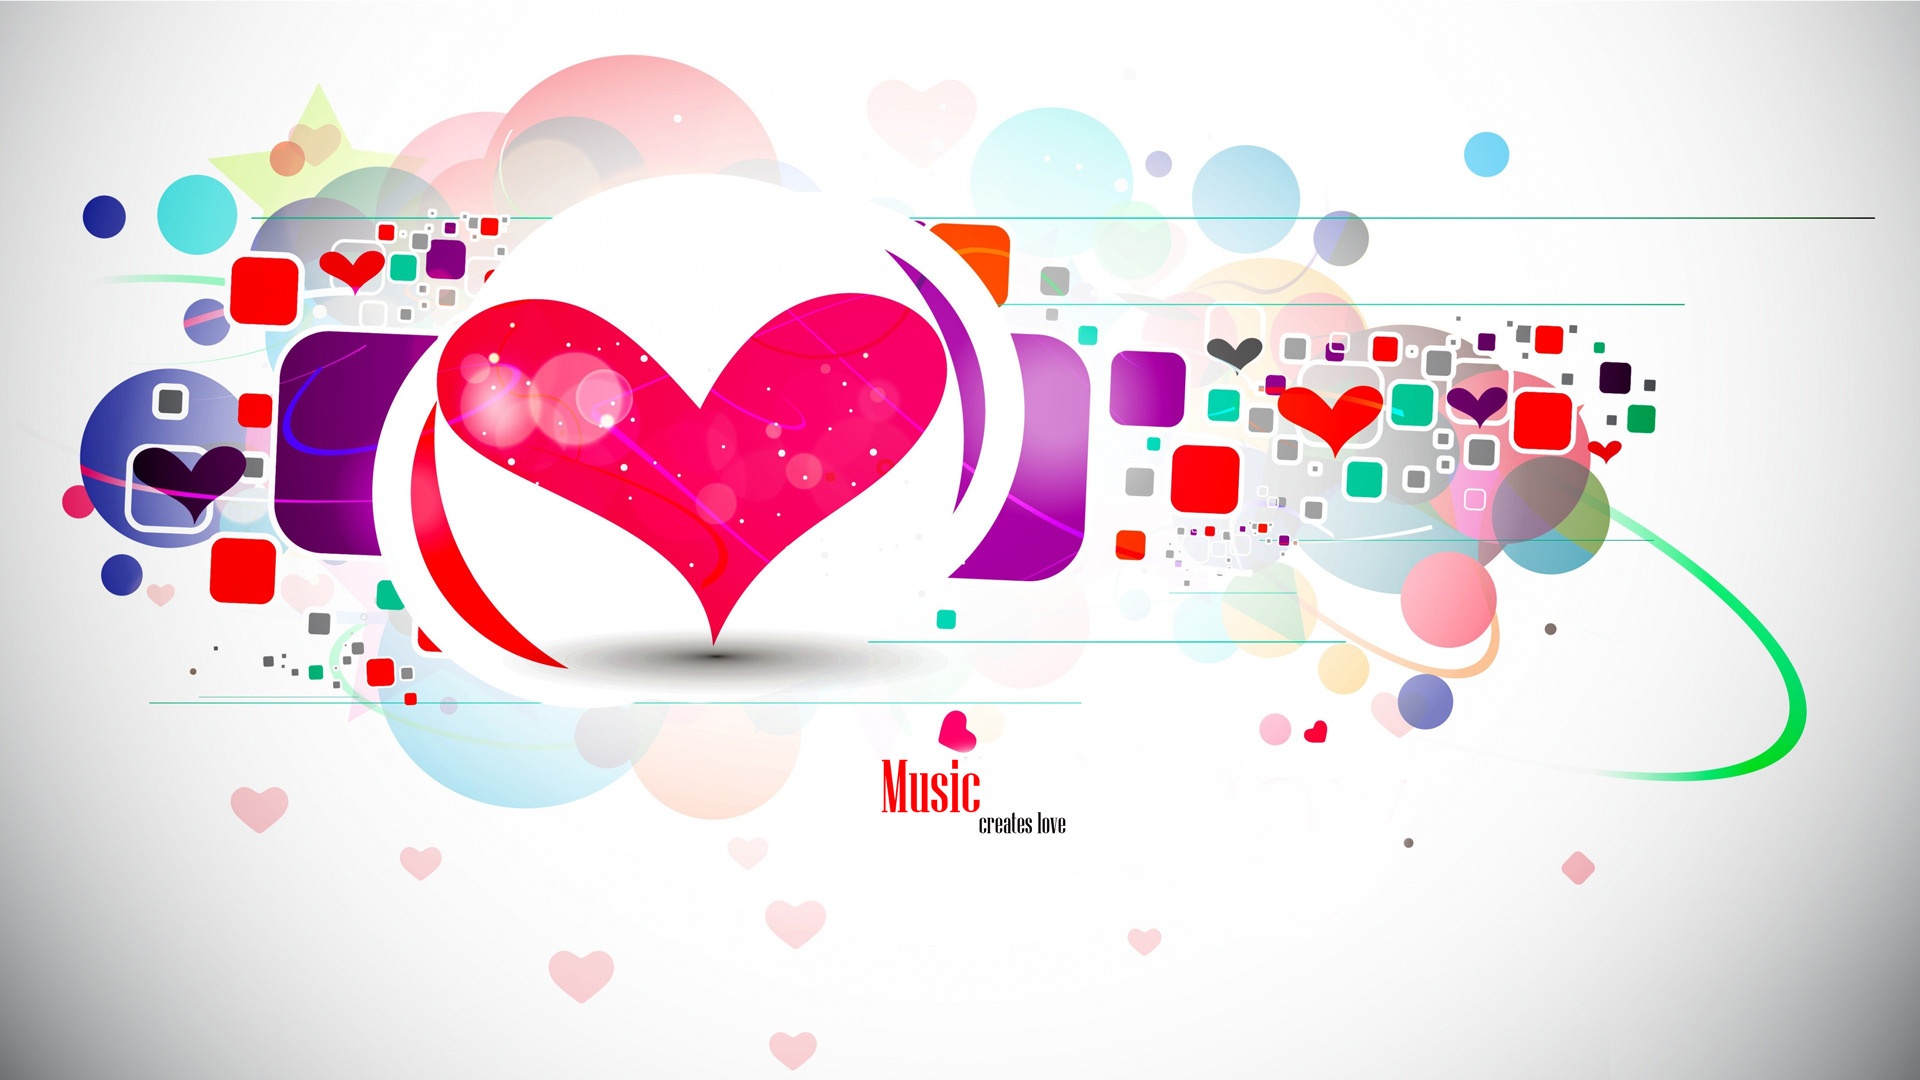 Music Creates Love wallpaper